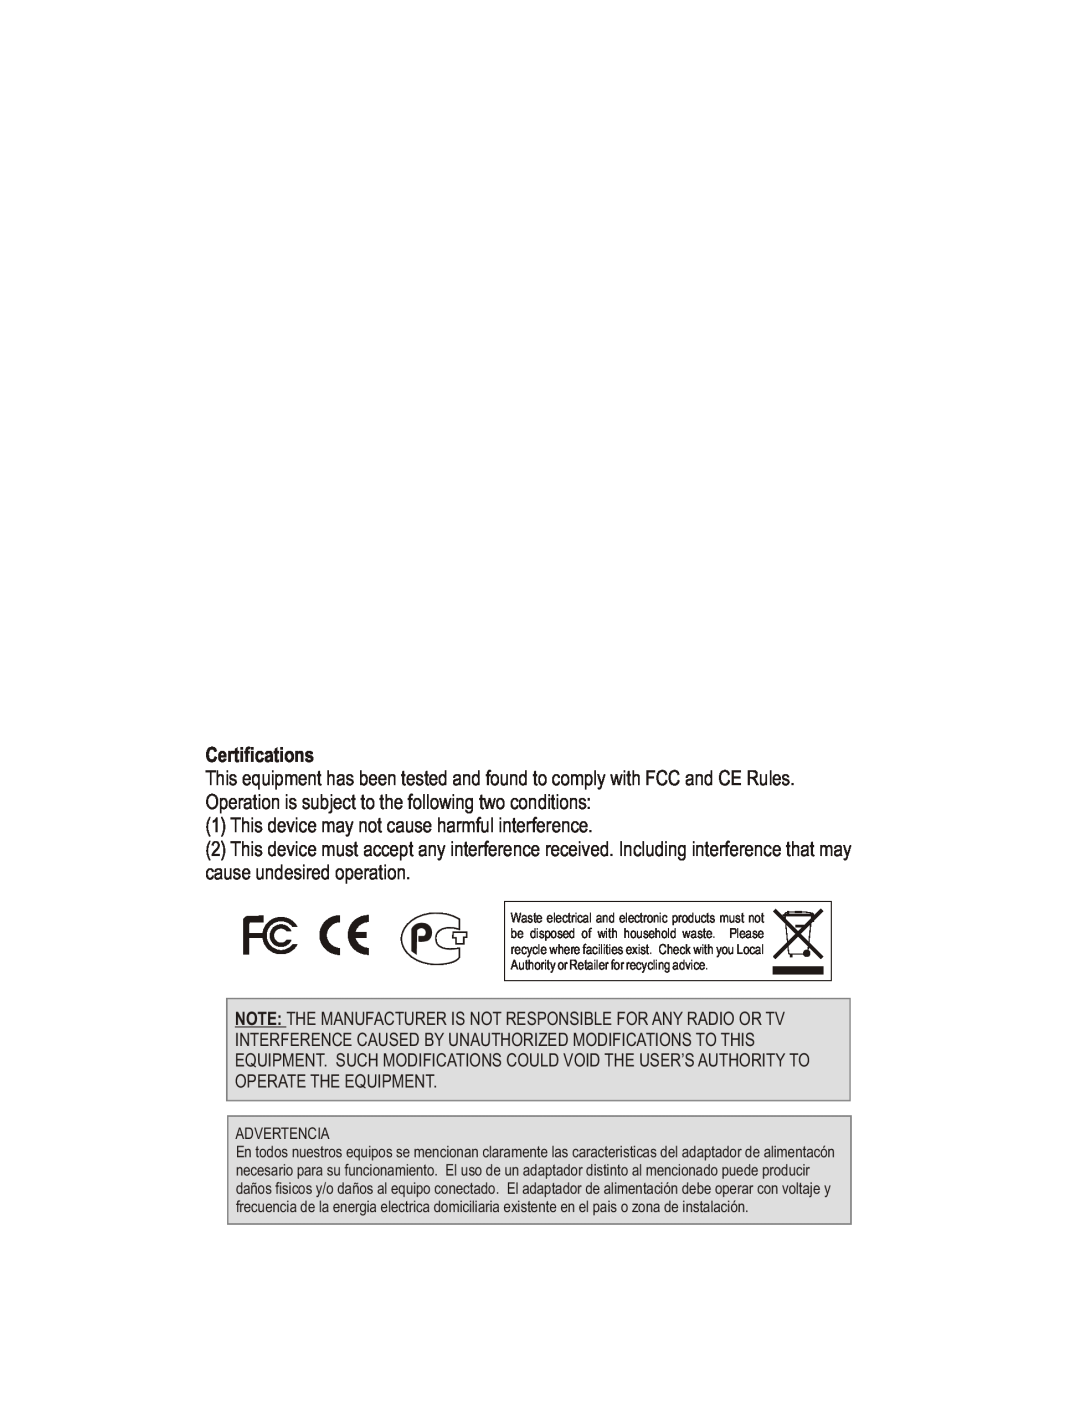 TRENDnet TEW-632BRP manual Certifications 